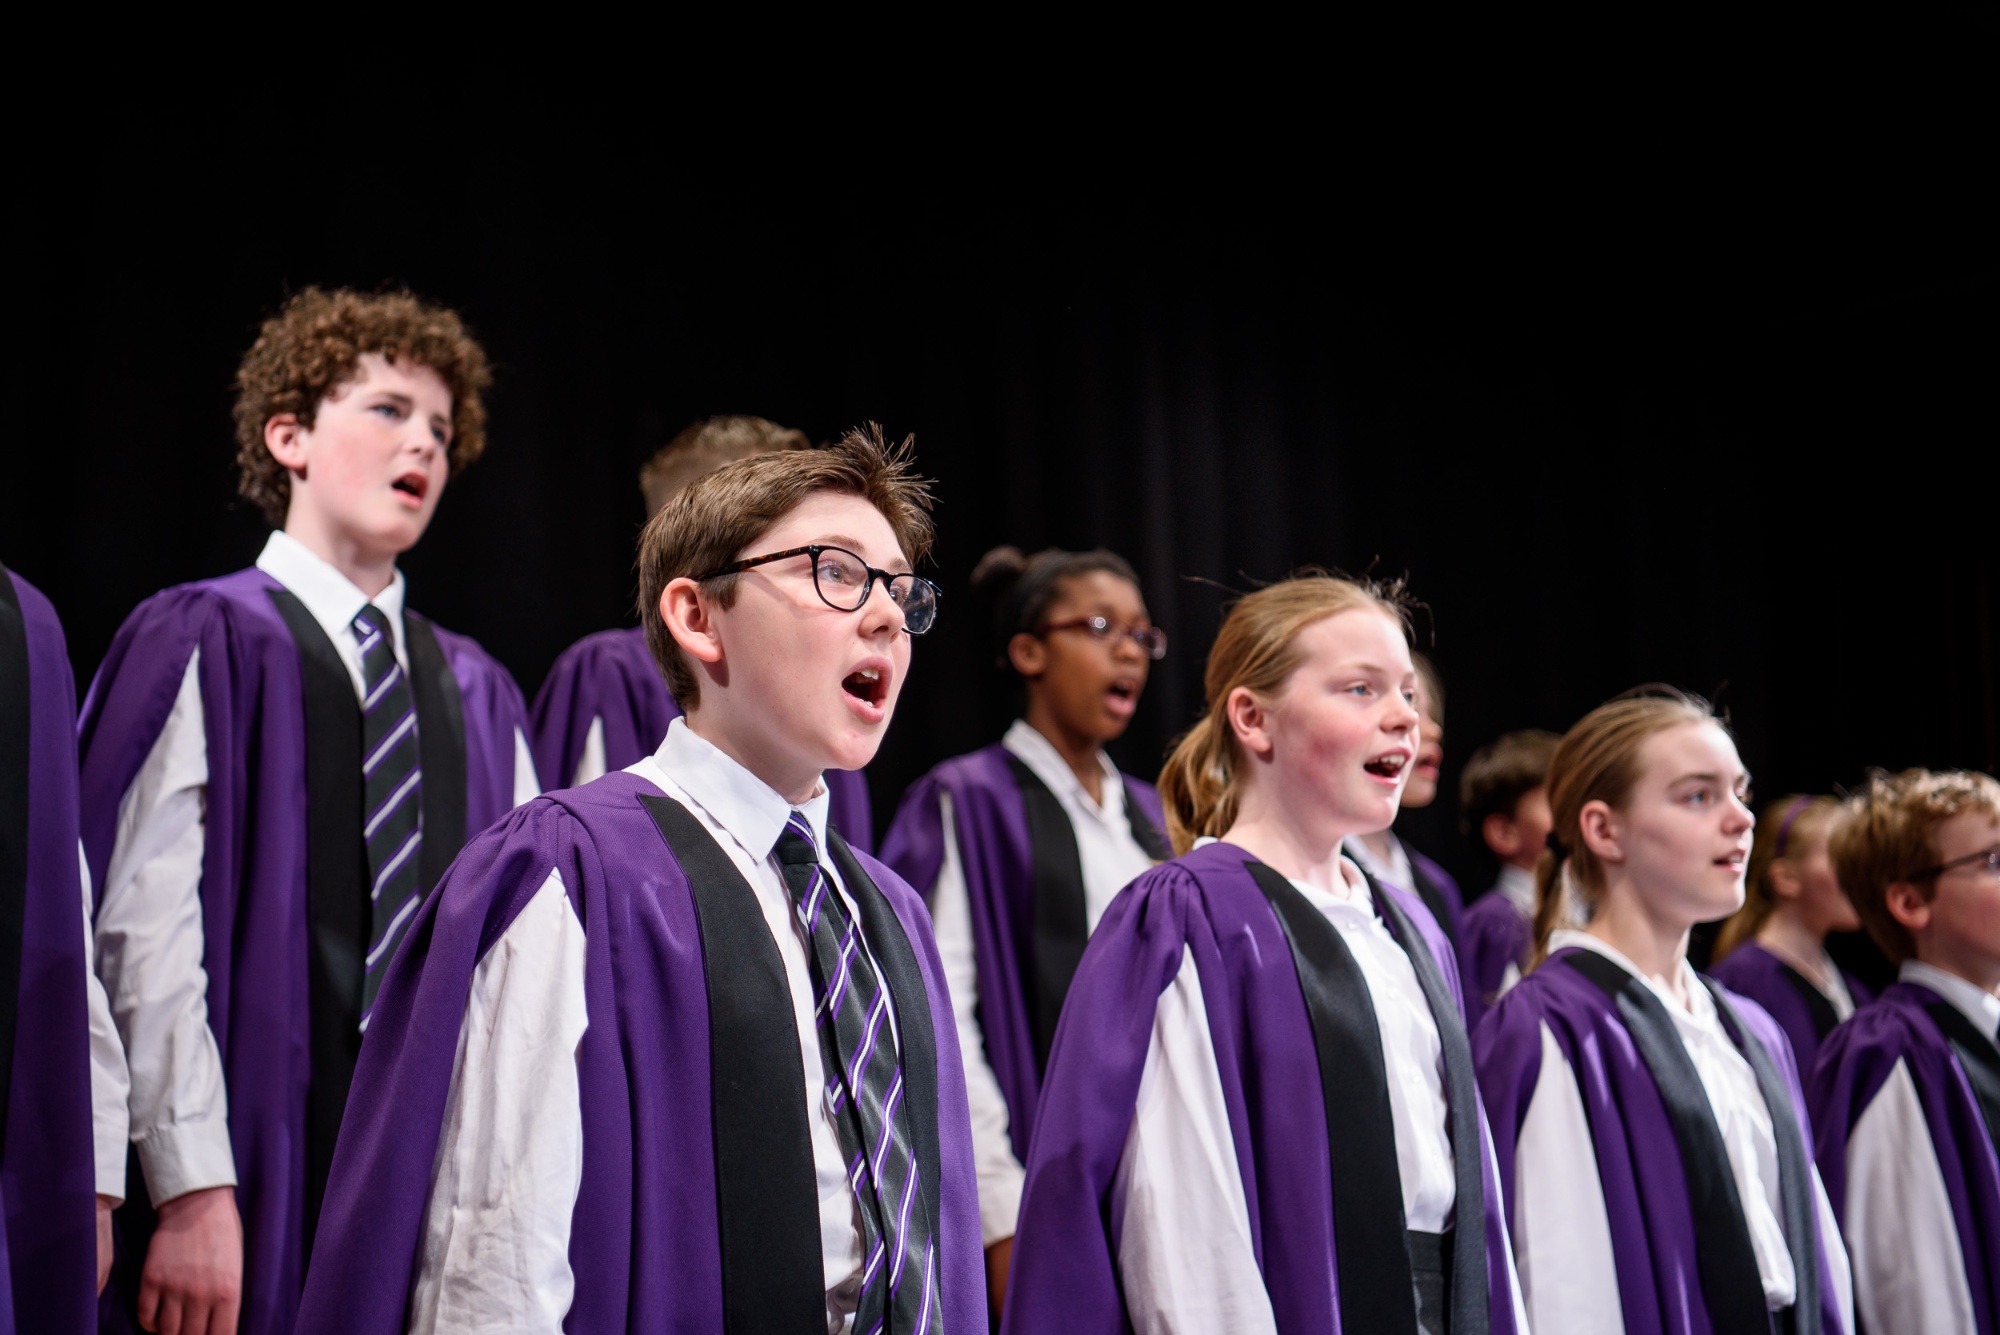 Kimbolton School's Senior Choir